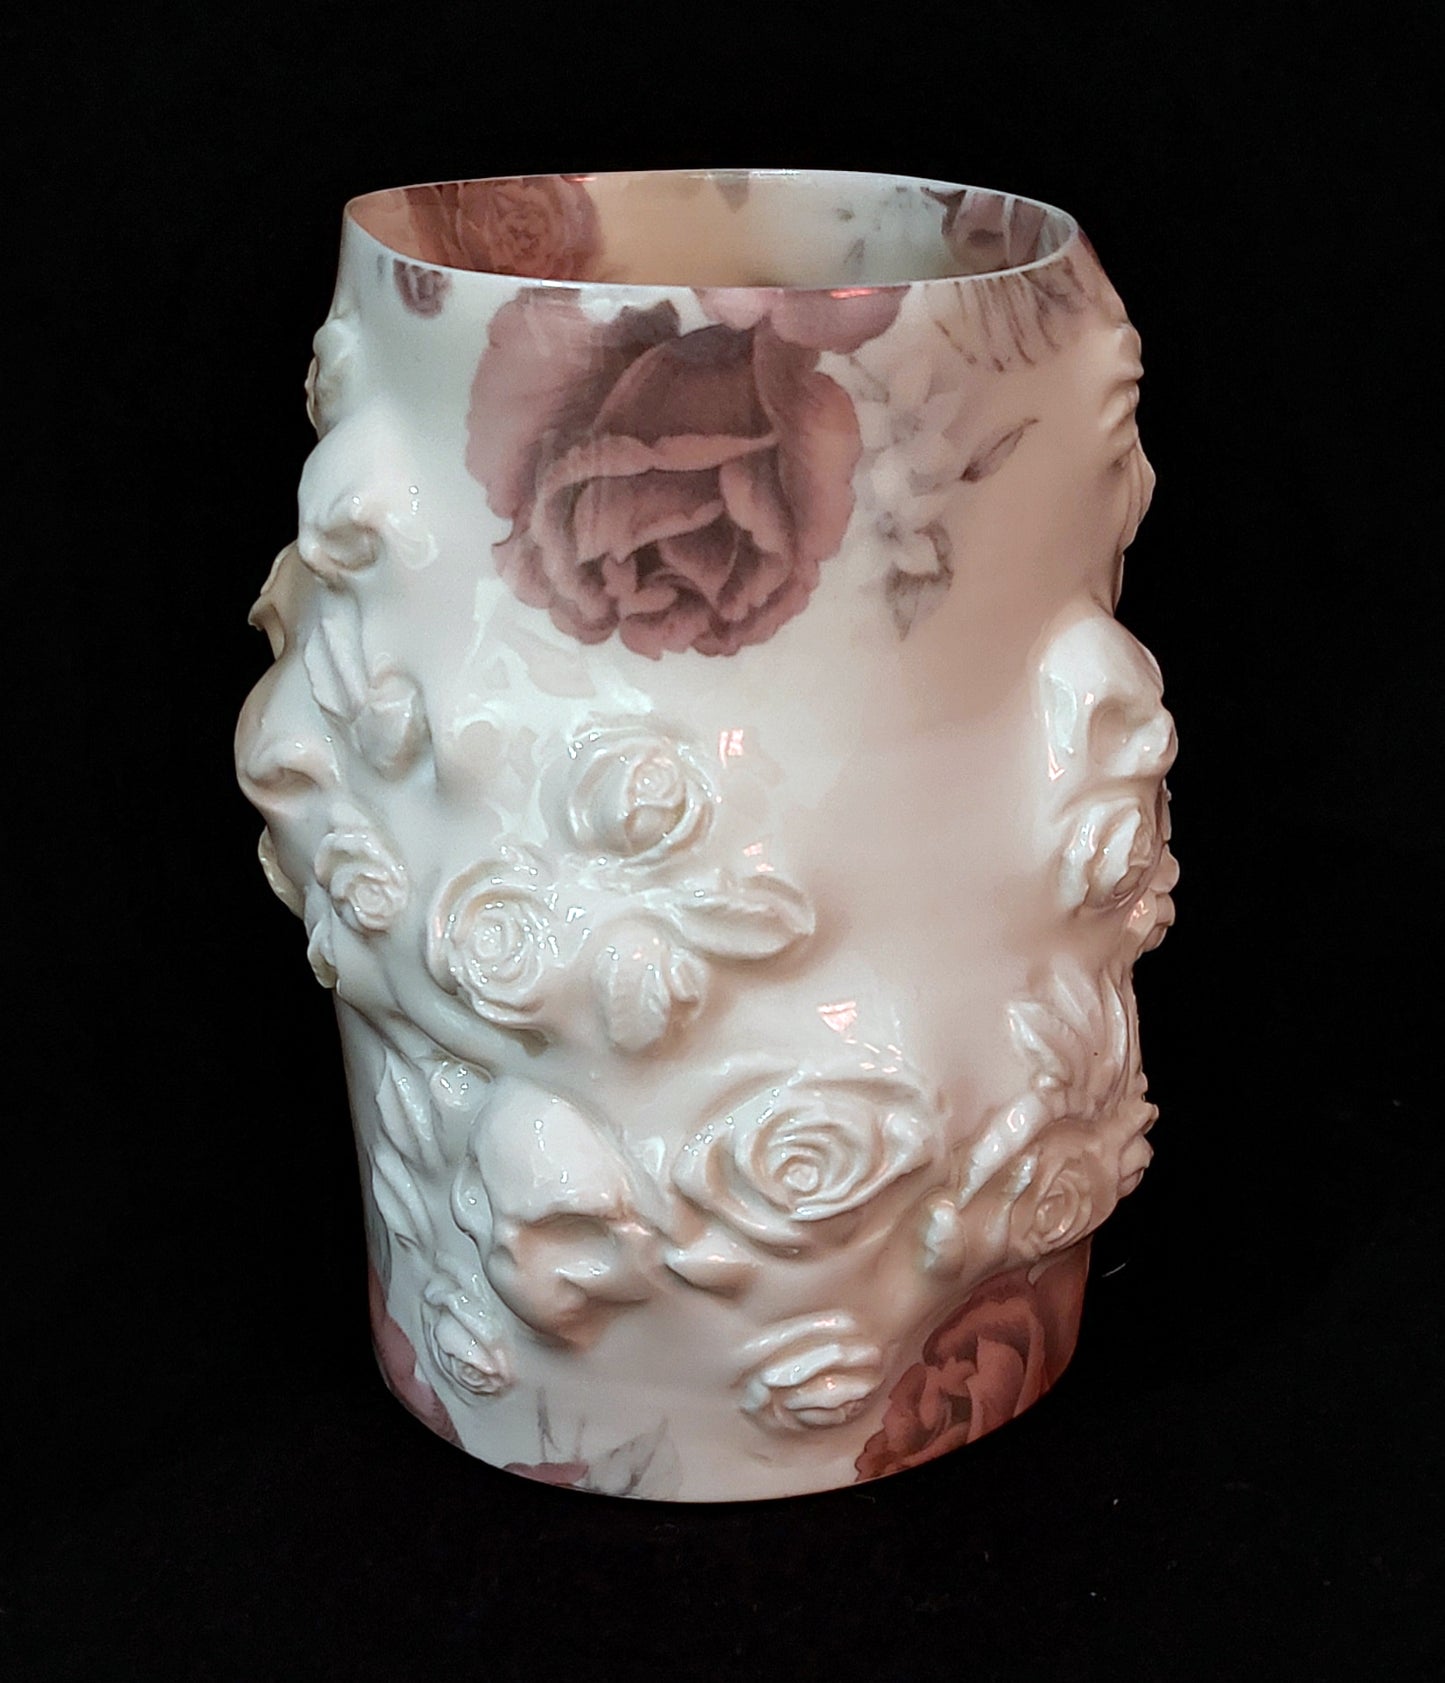 Anja-Lubach-Rose-Skull-Vase-12x16